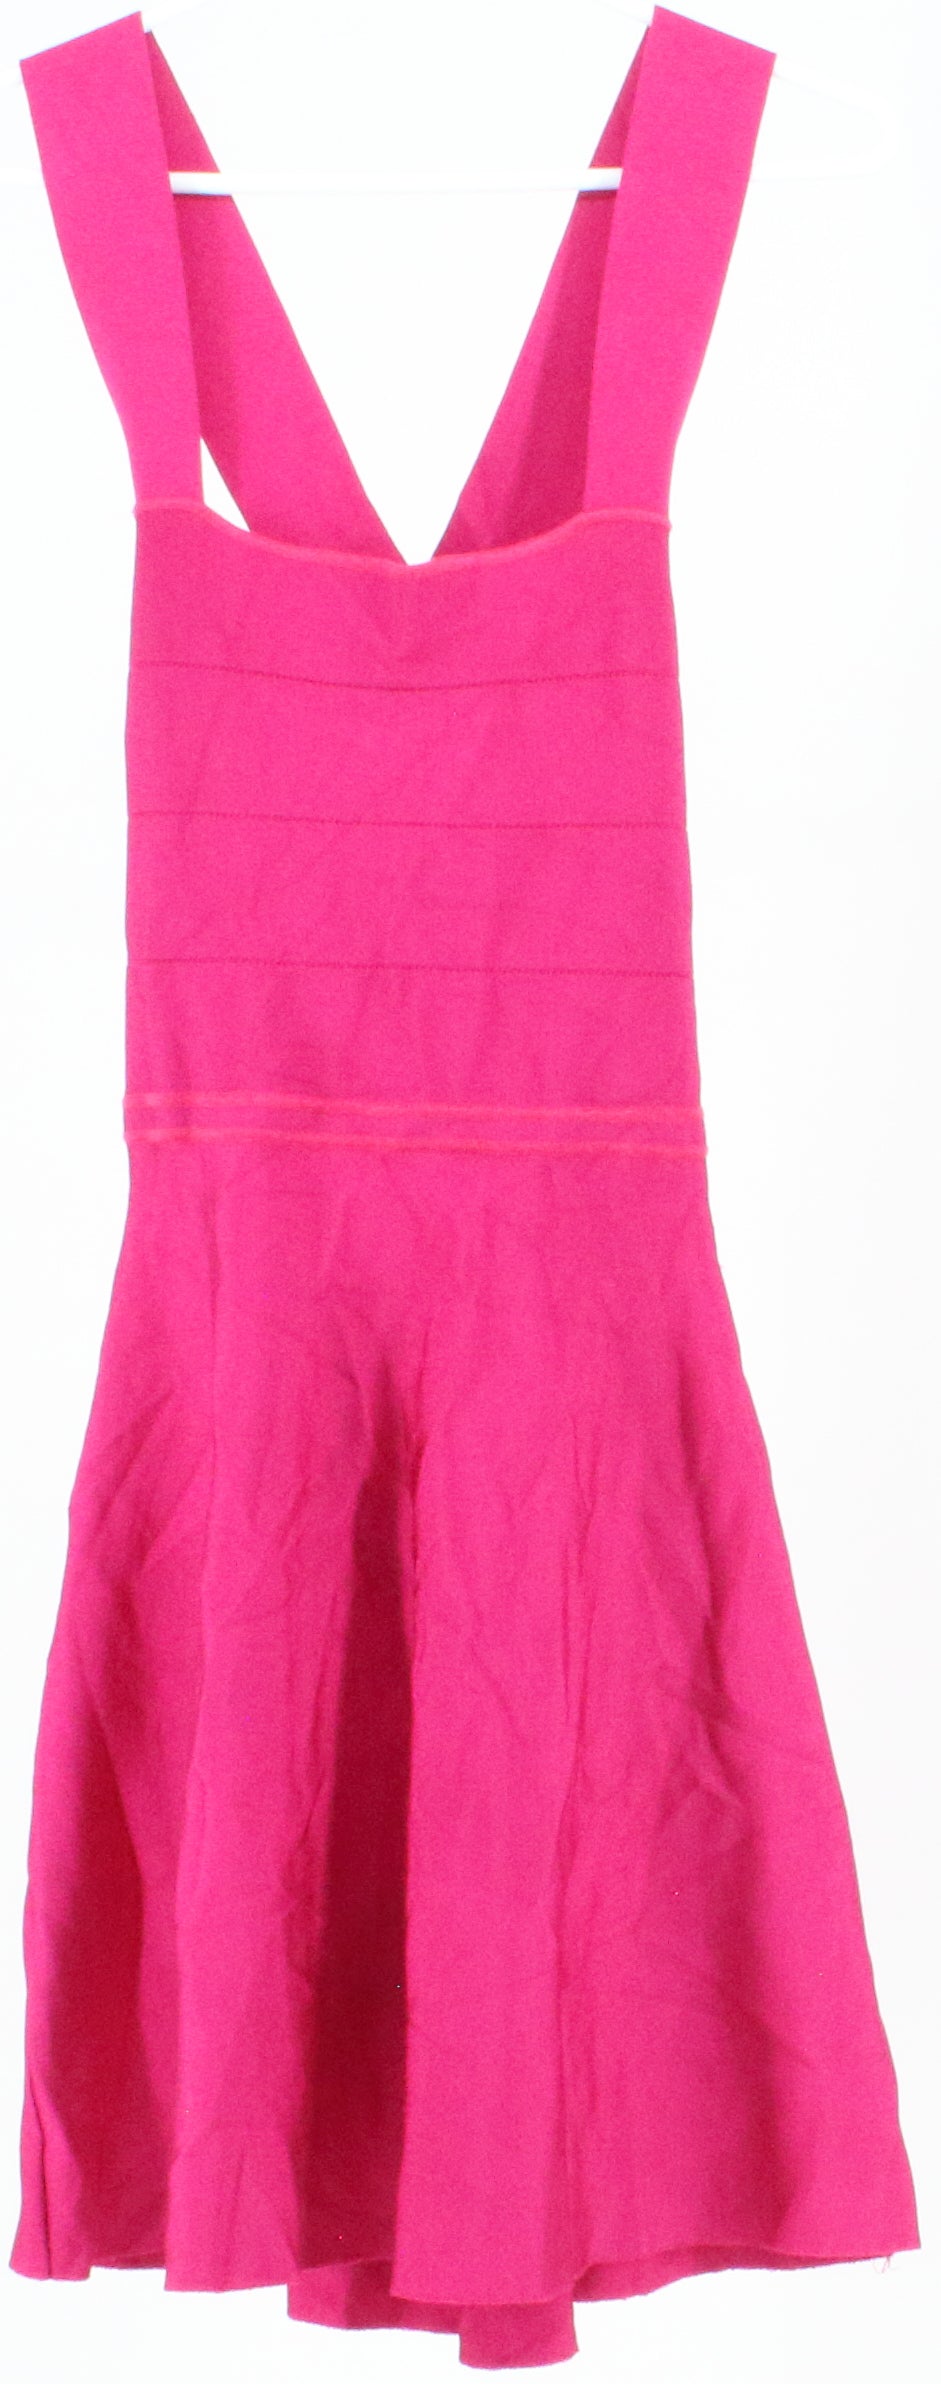 Zara Pink Knit Dress